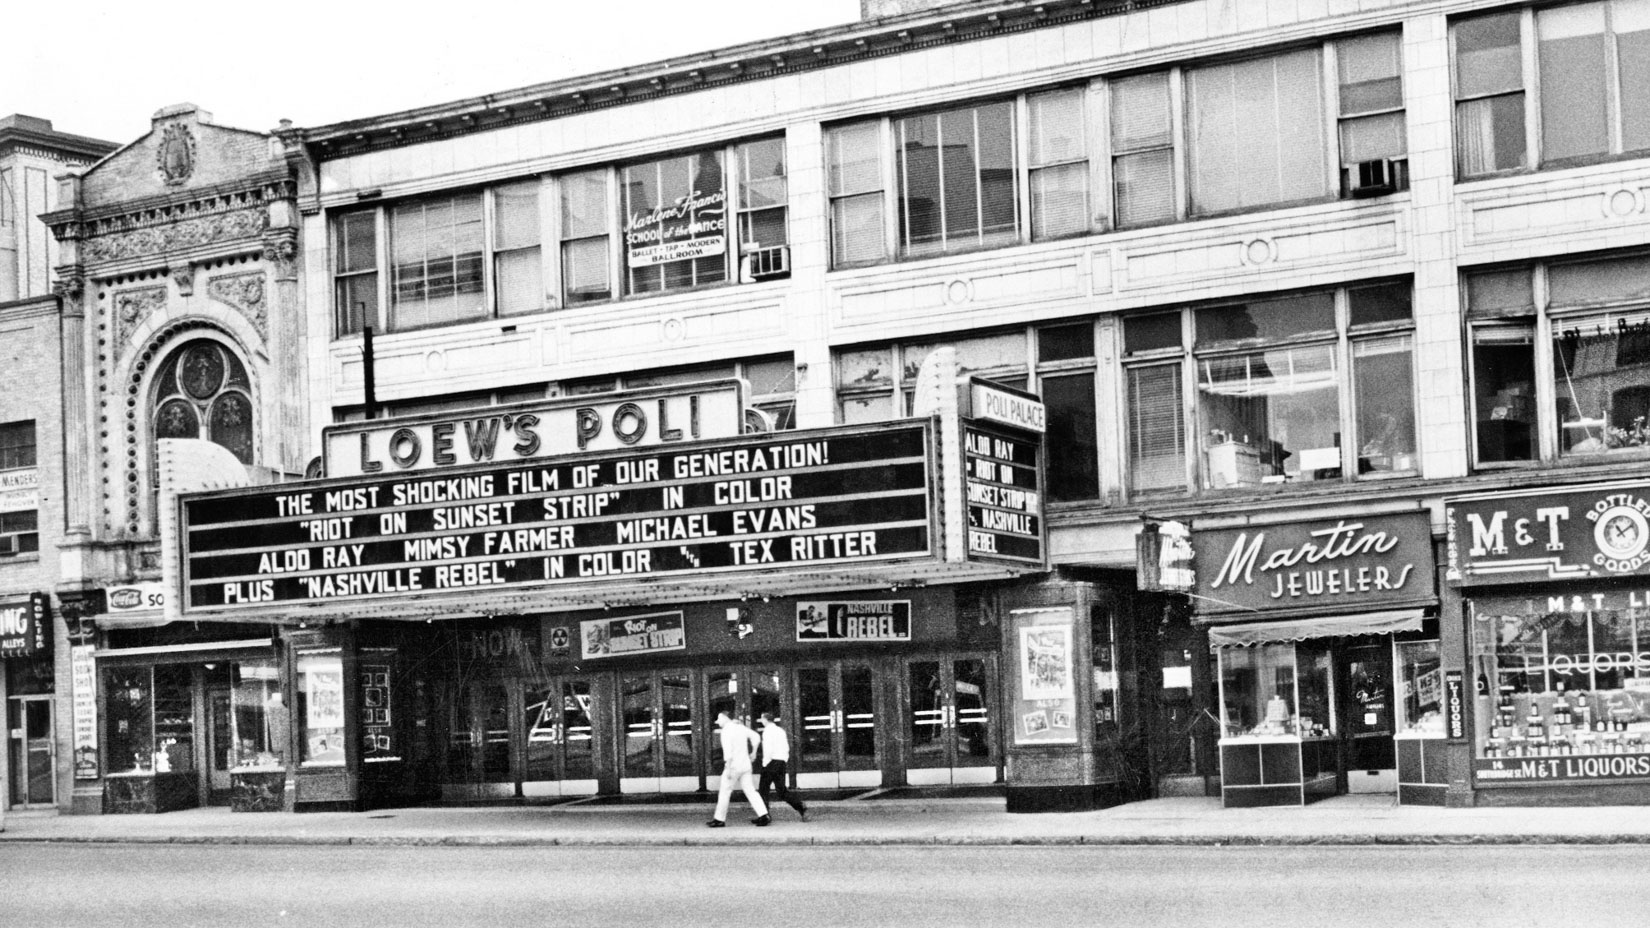 historical photo of Loews Poli theater.